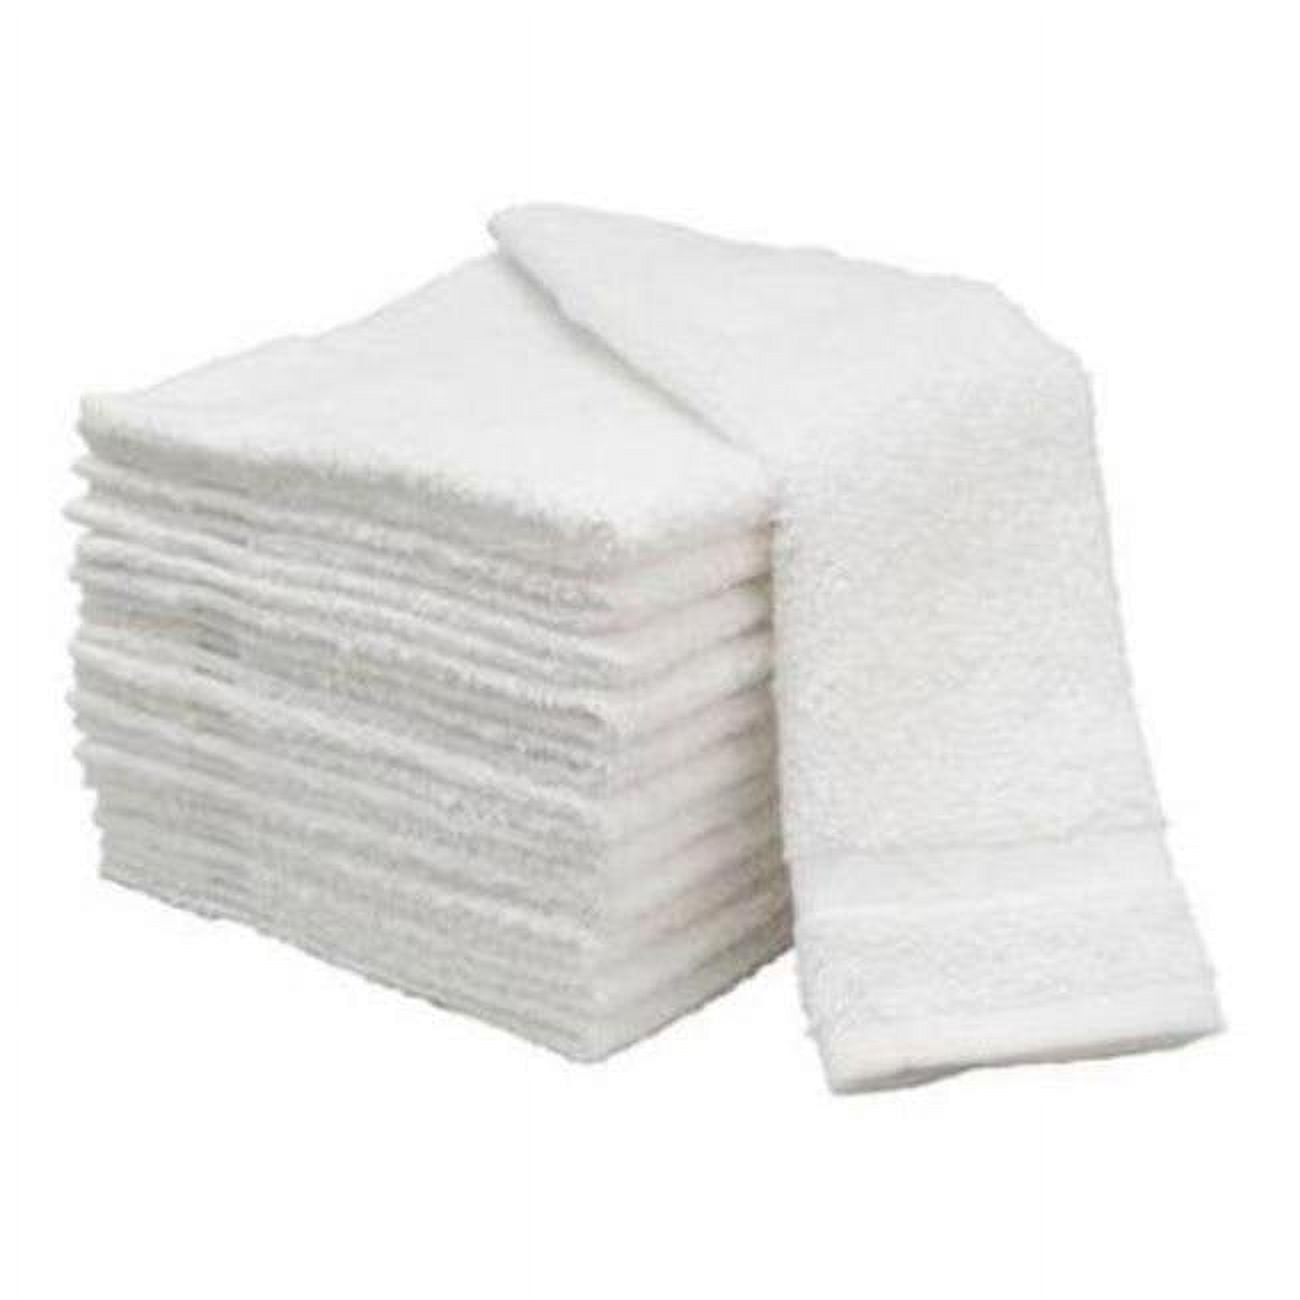 12 X 12 In. Ddi Economy Grade Washcloth, White - Case Of 300